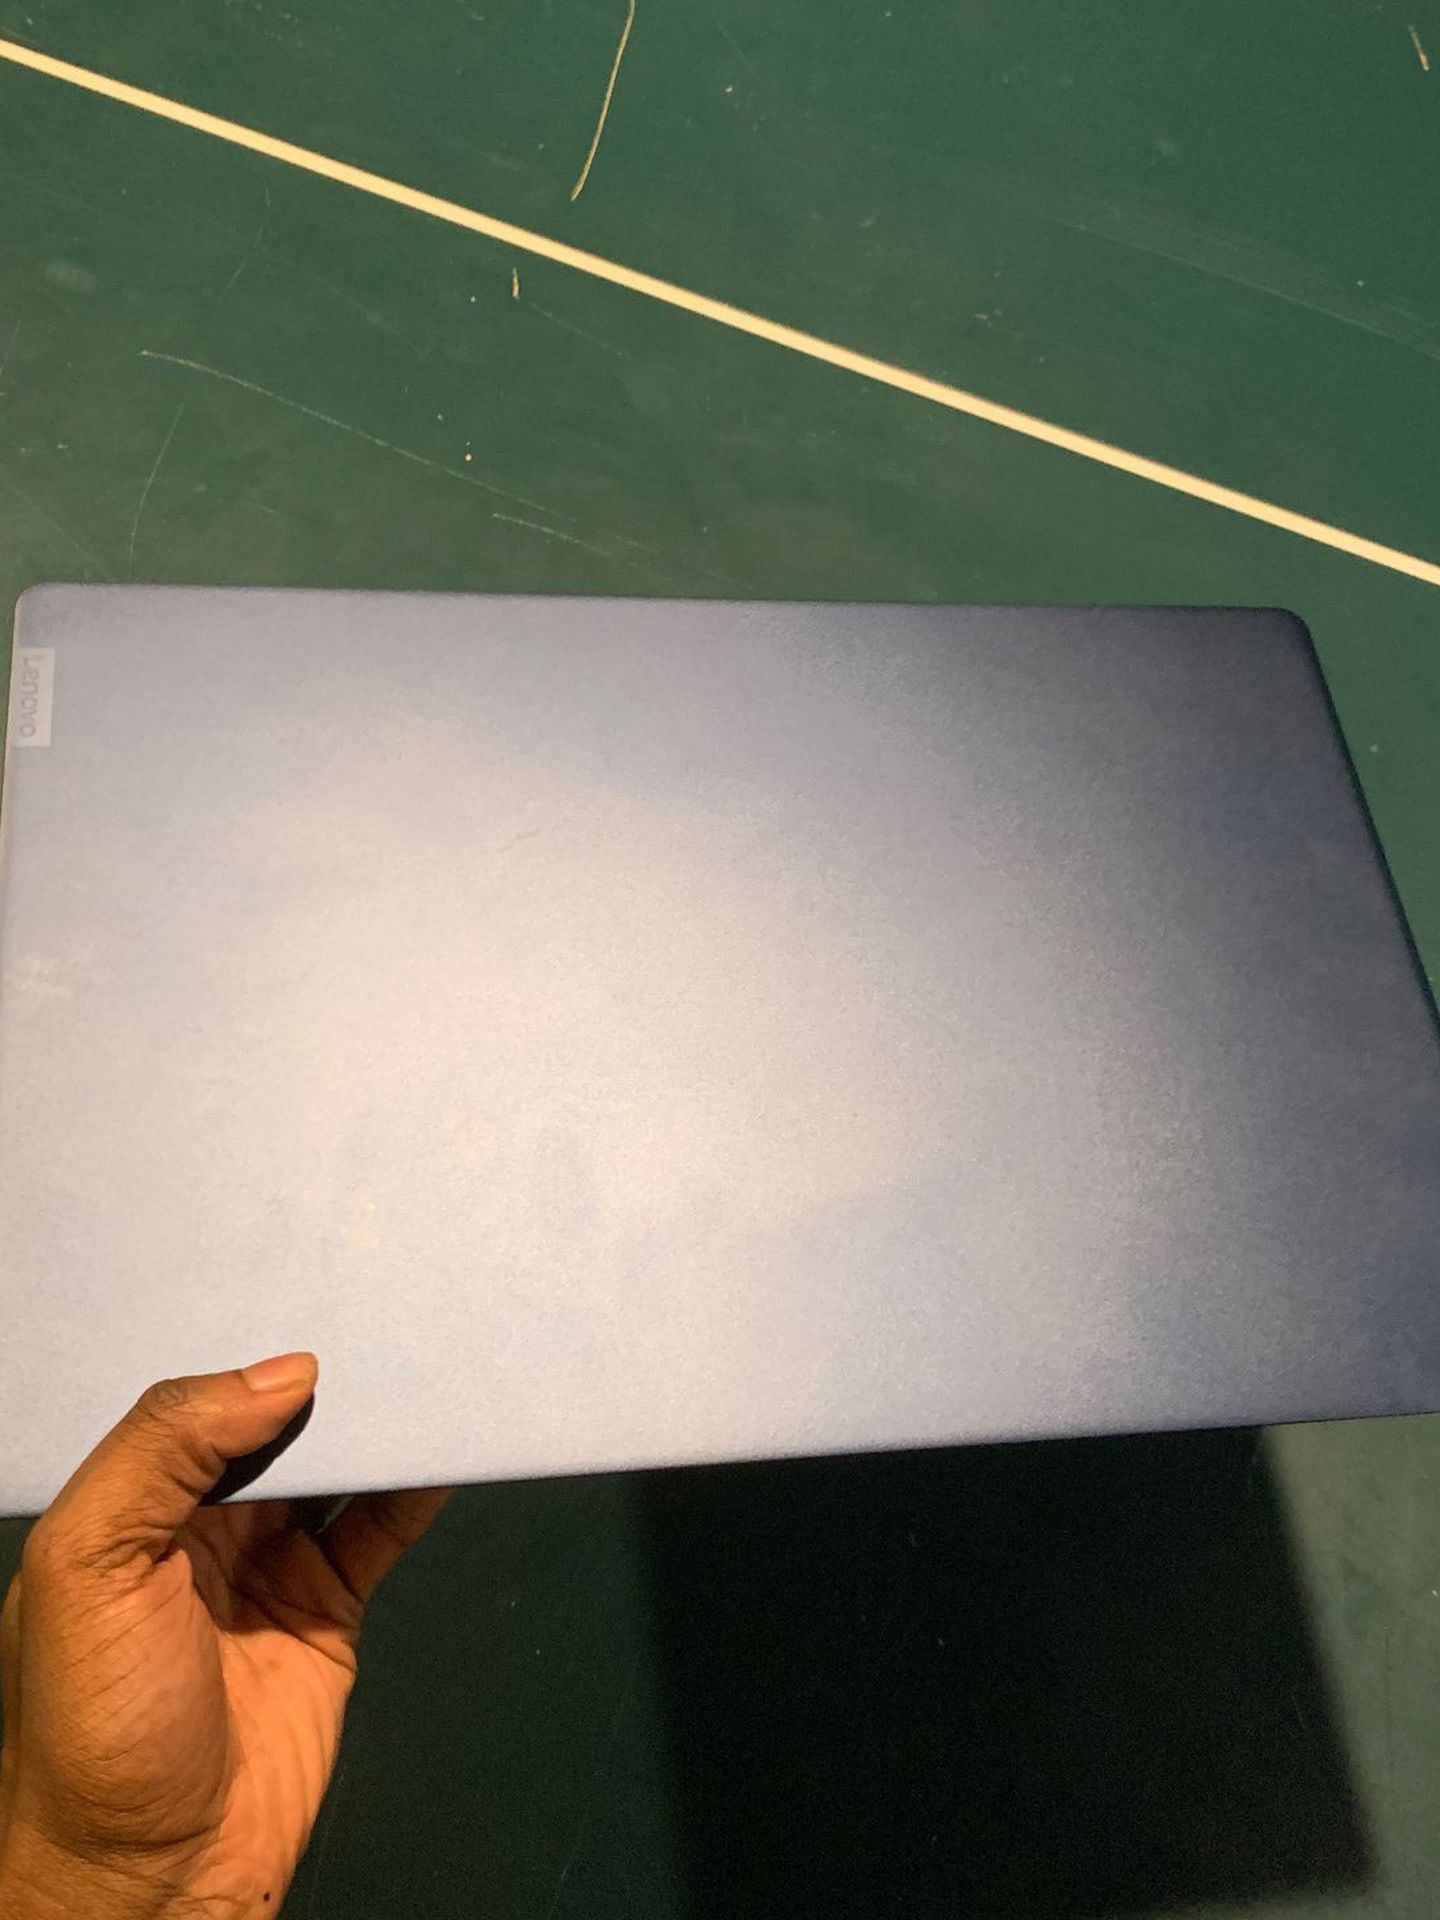 2019 Lenovo ideapad 330s has 15.6” midnight blue laptop